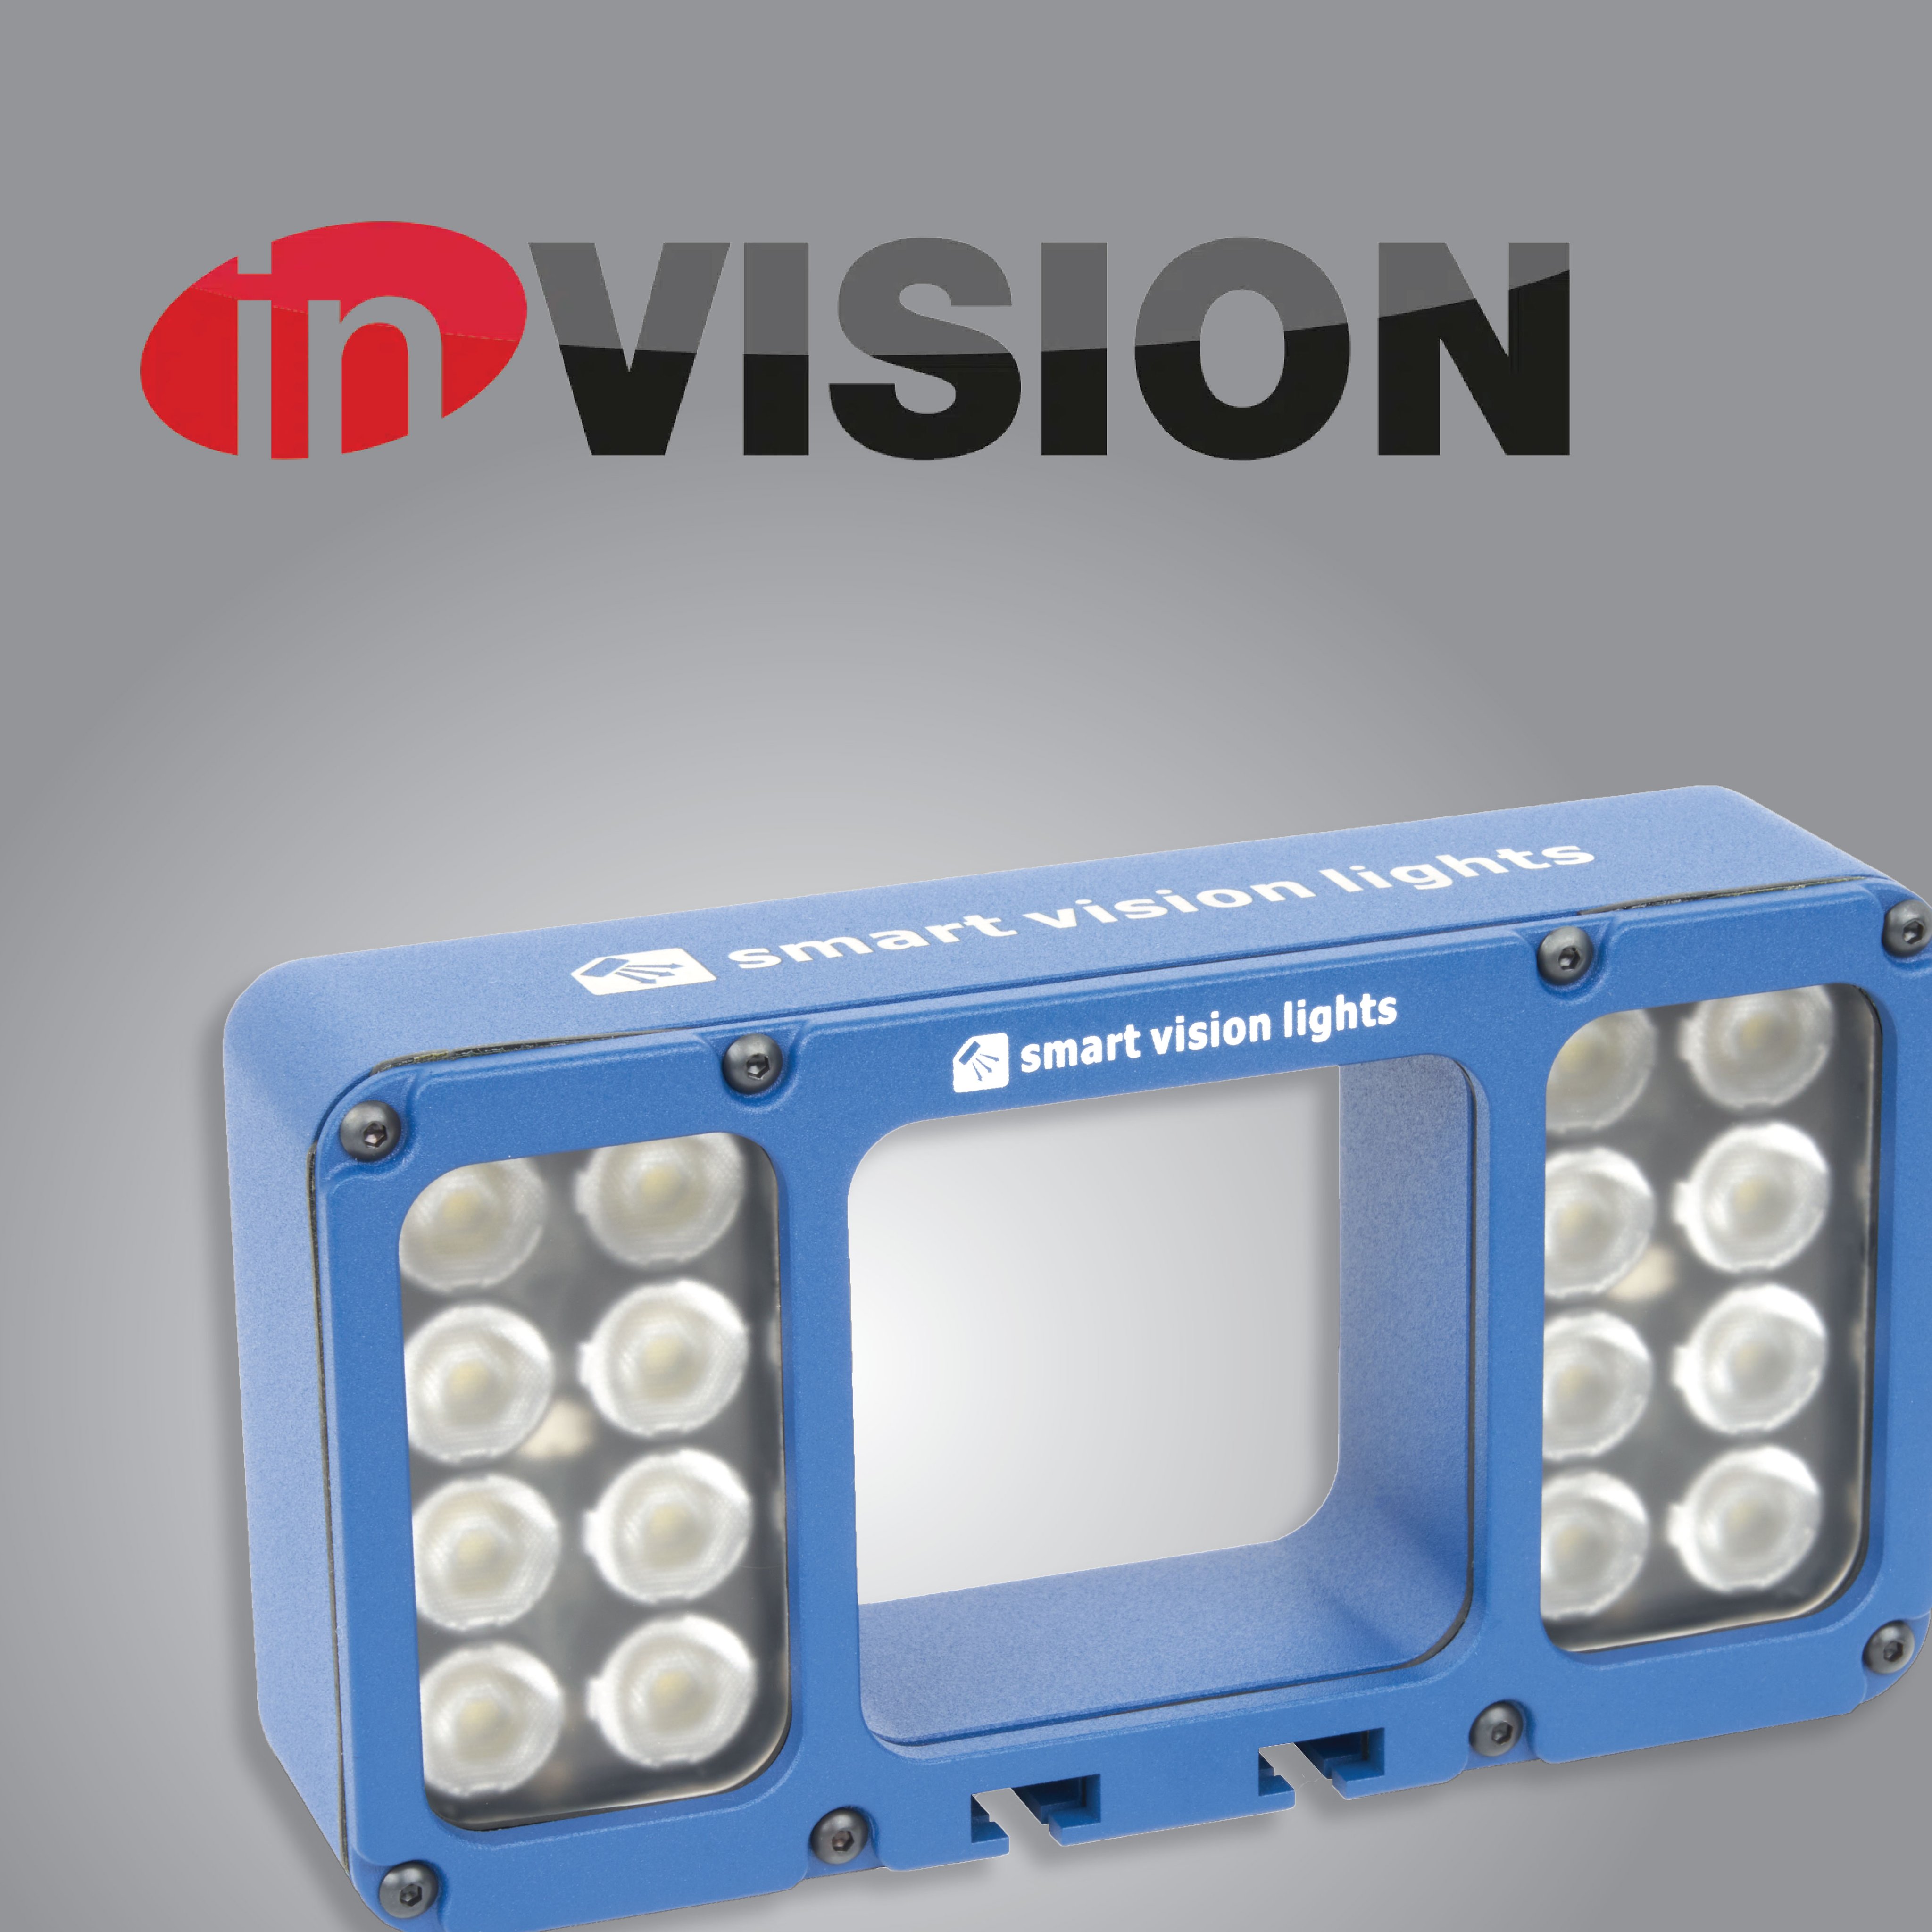 JWL225-DO machine vision light with Hidden Strobe for logistics